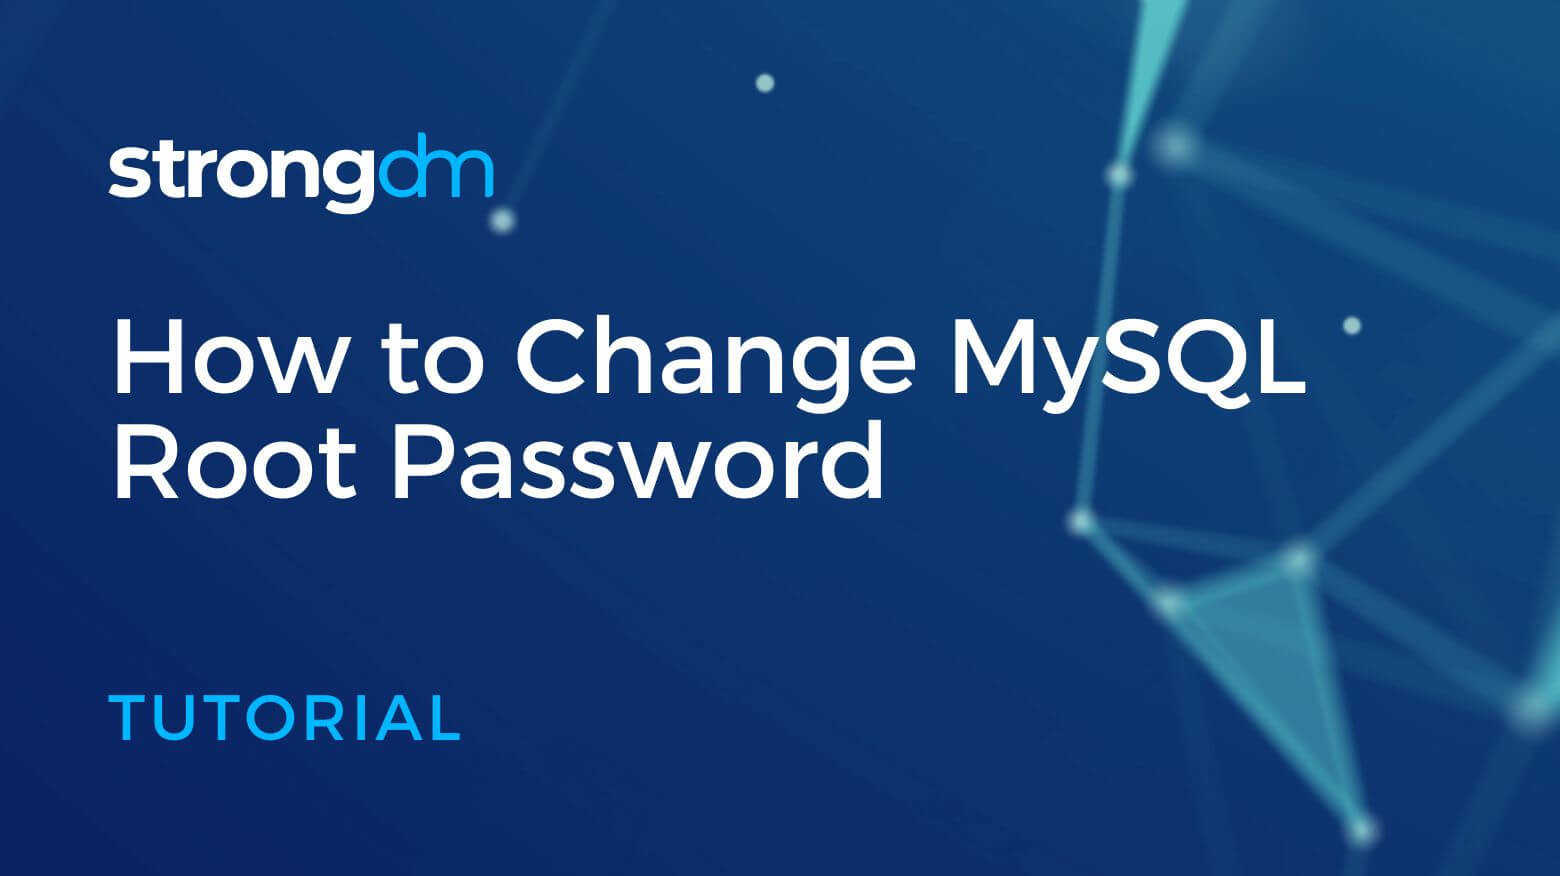 How to Change the MySQL Root Password